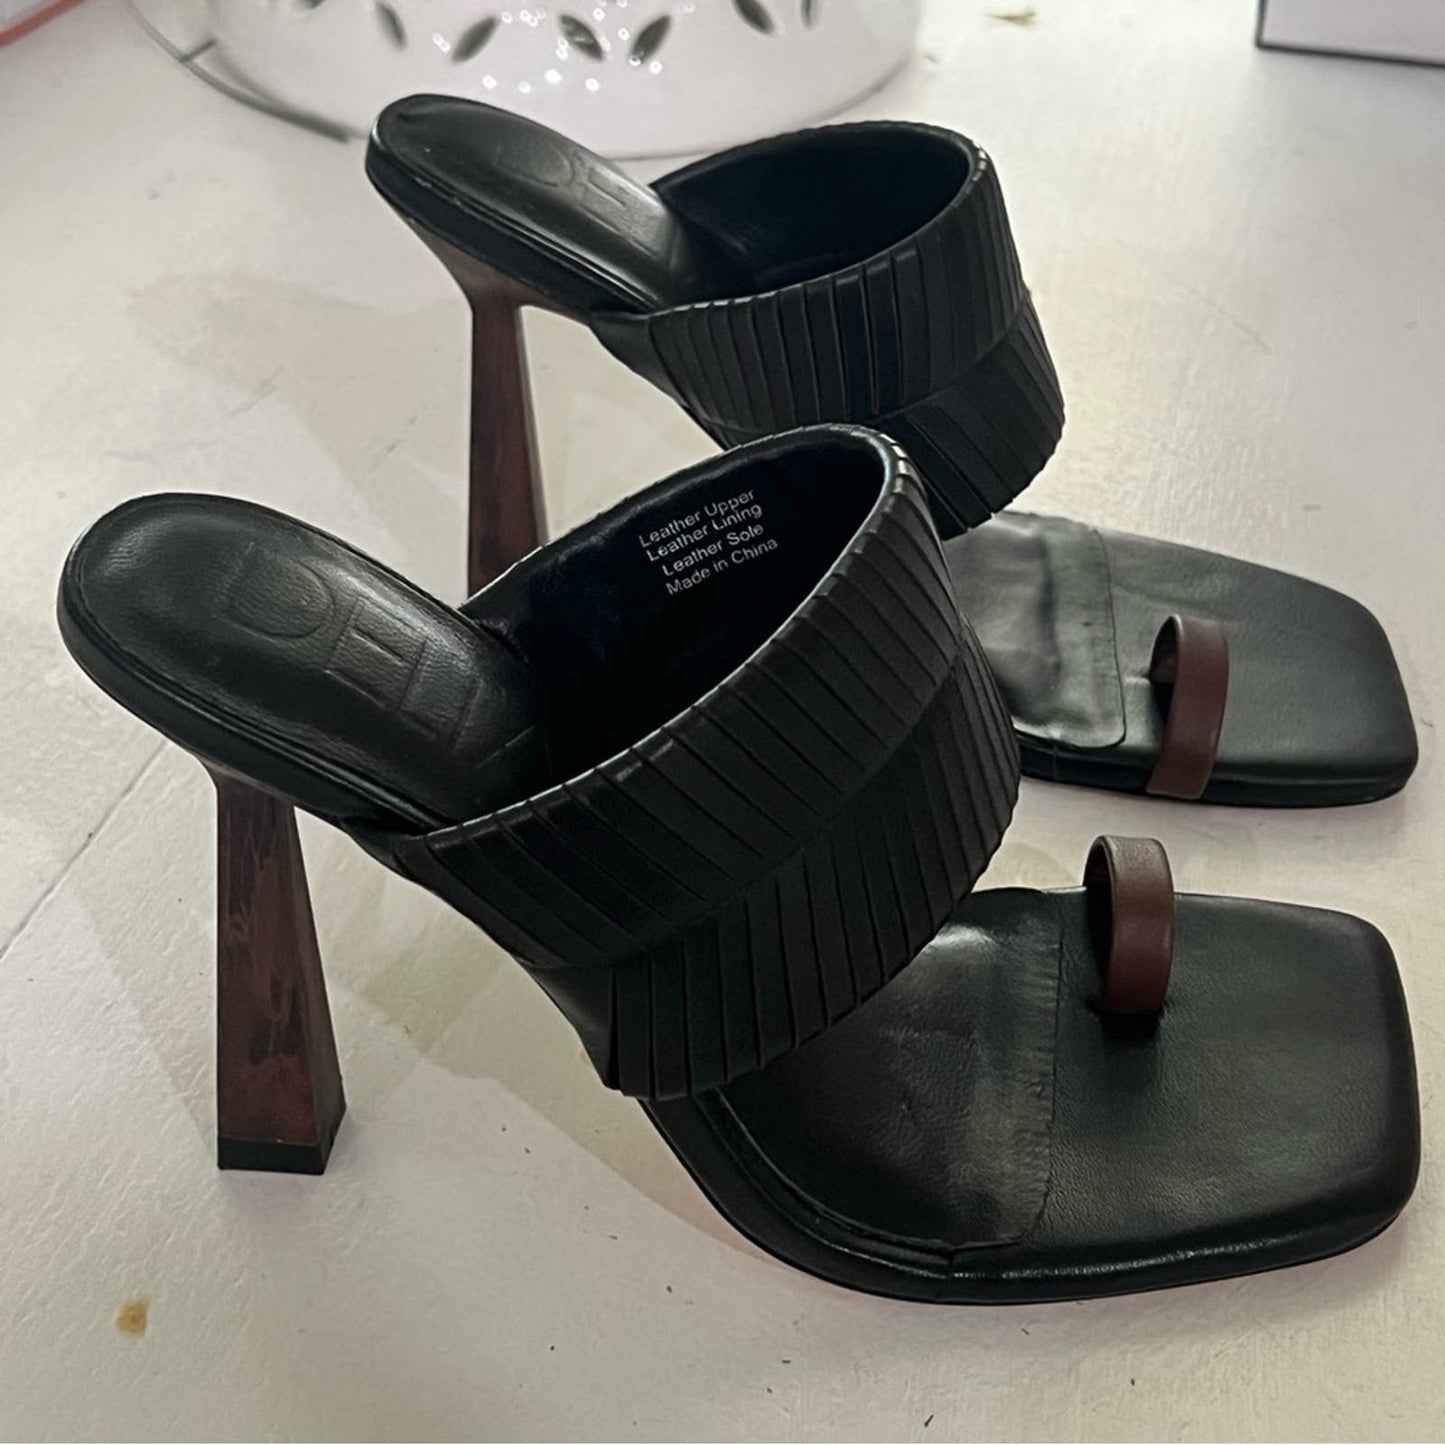 DELTAN Black Leather Sandals w Wooden Heels 6.5